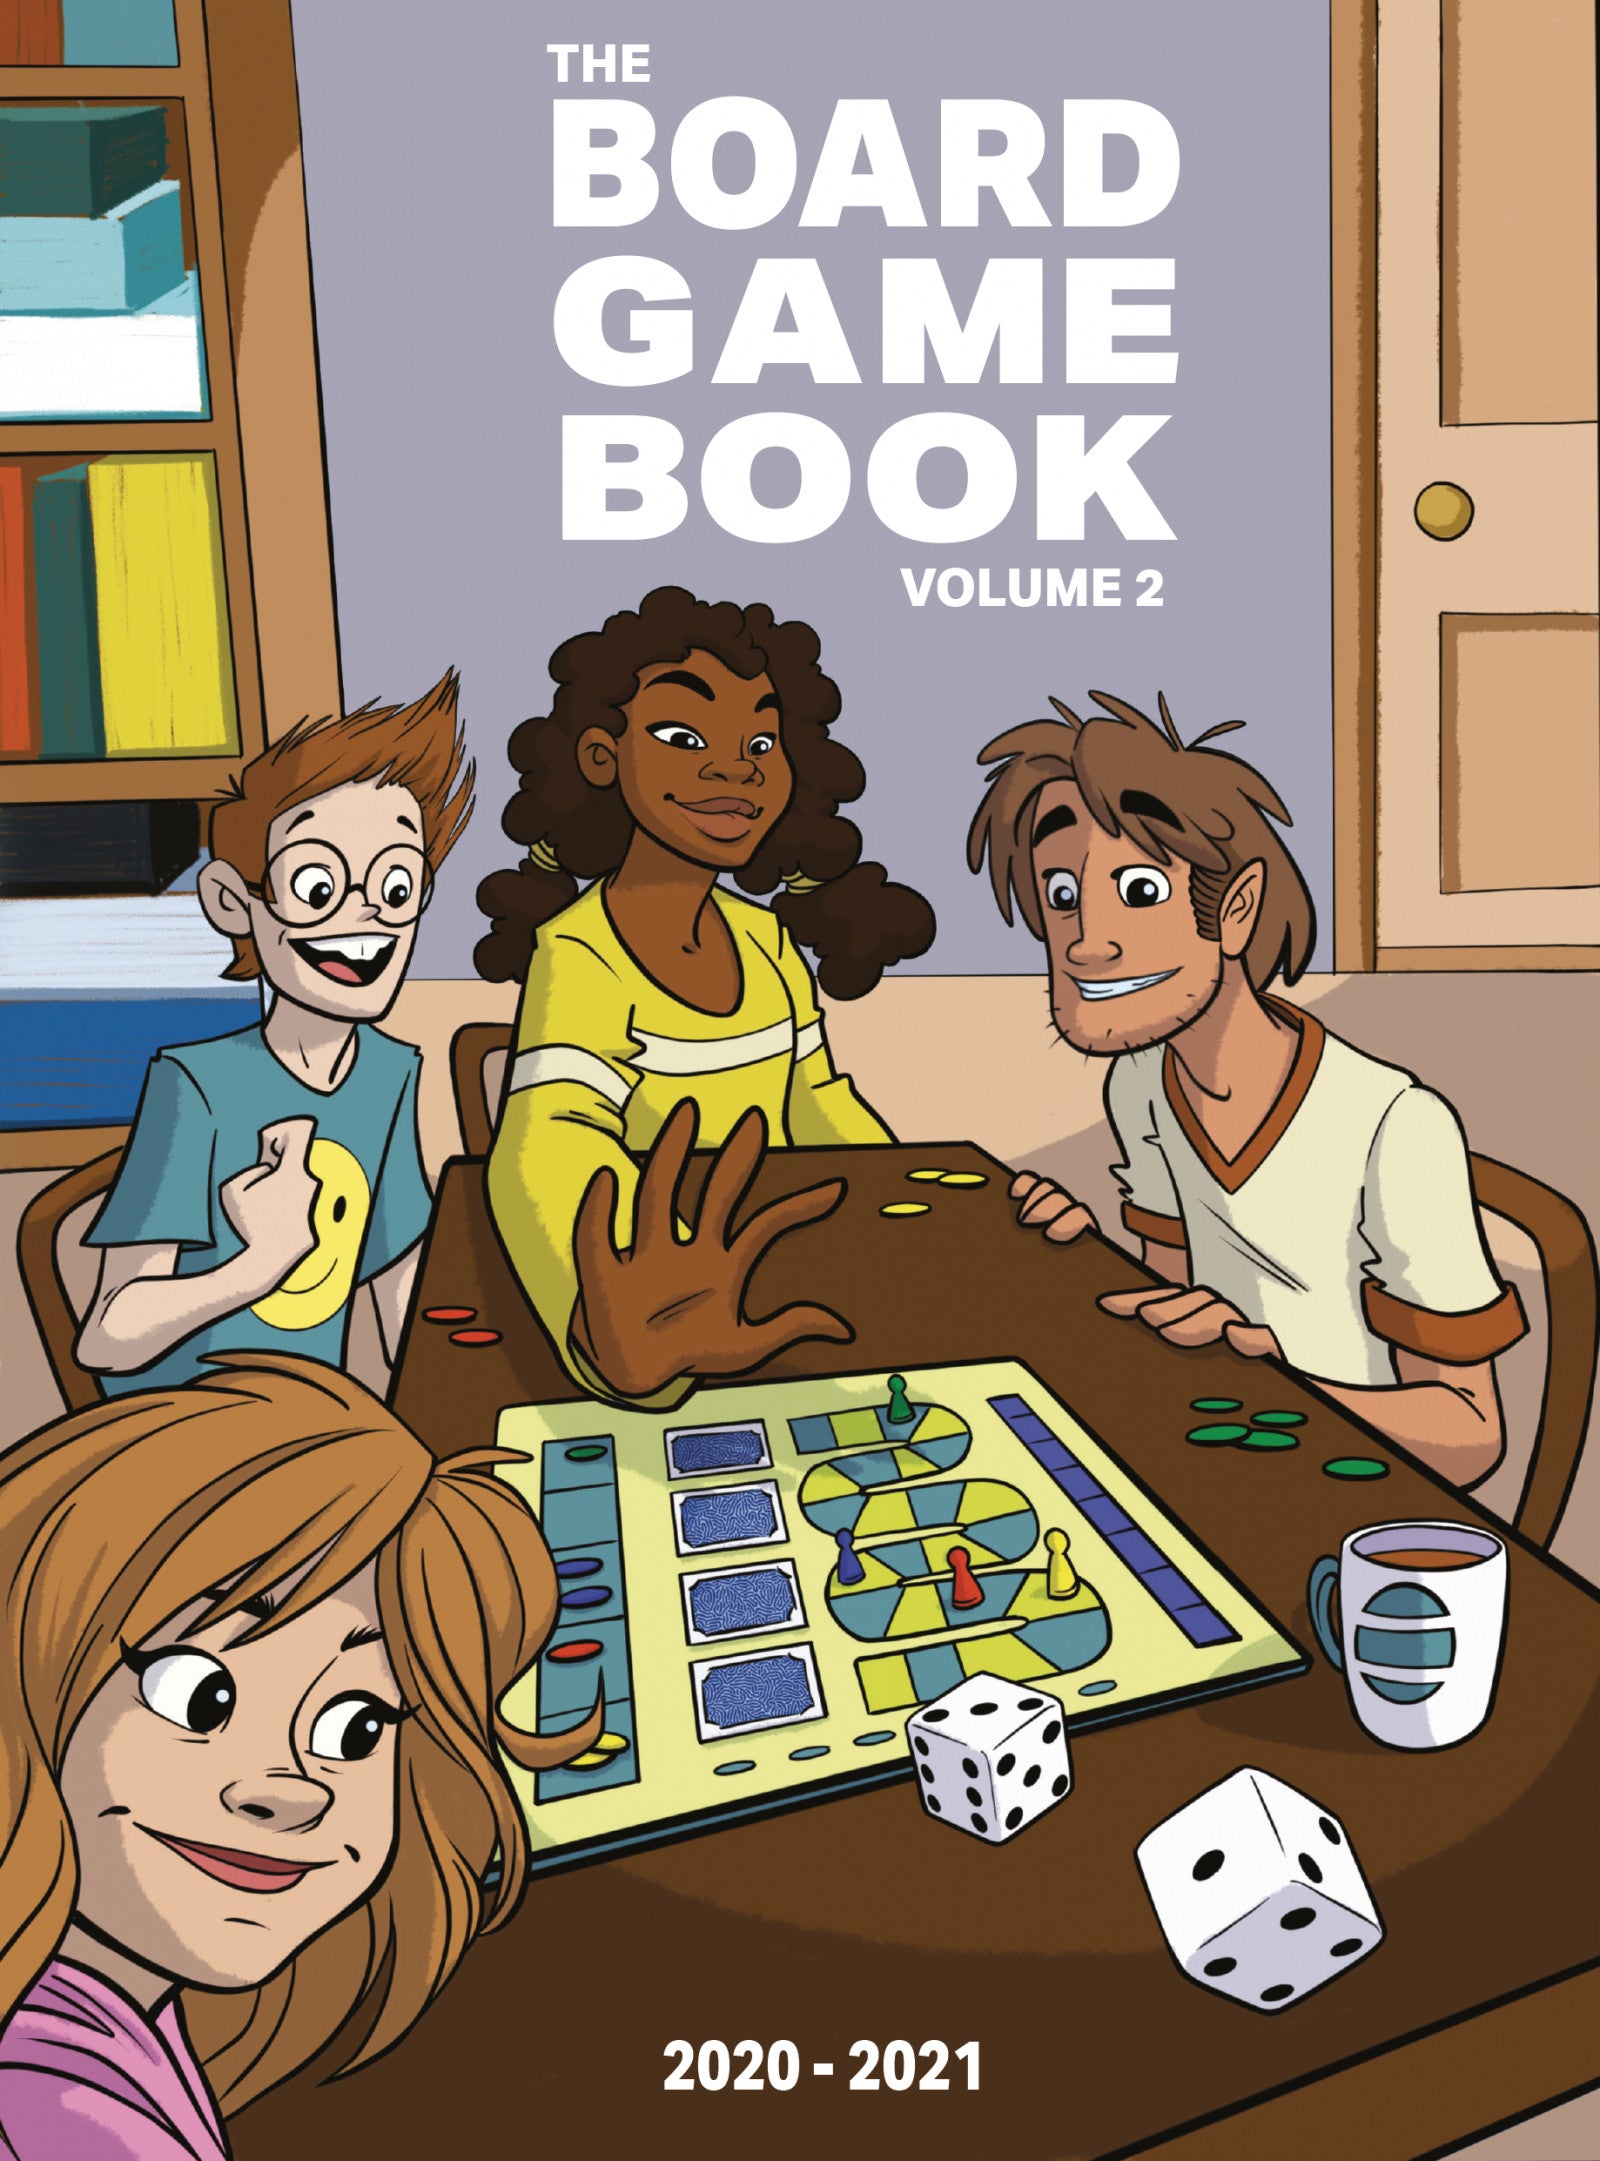 The Board Game Book Volume 2